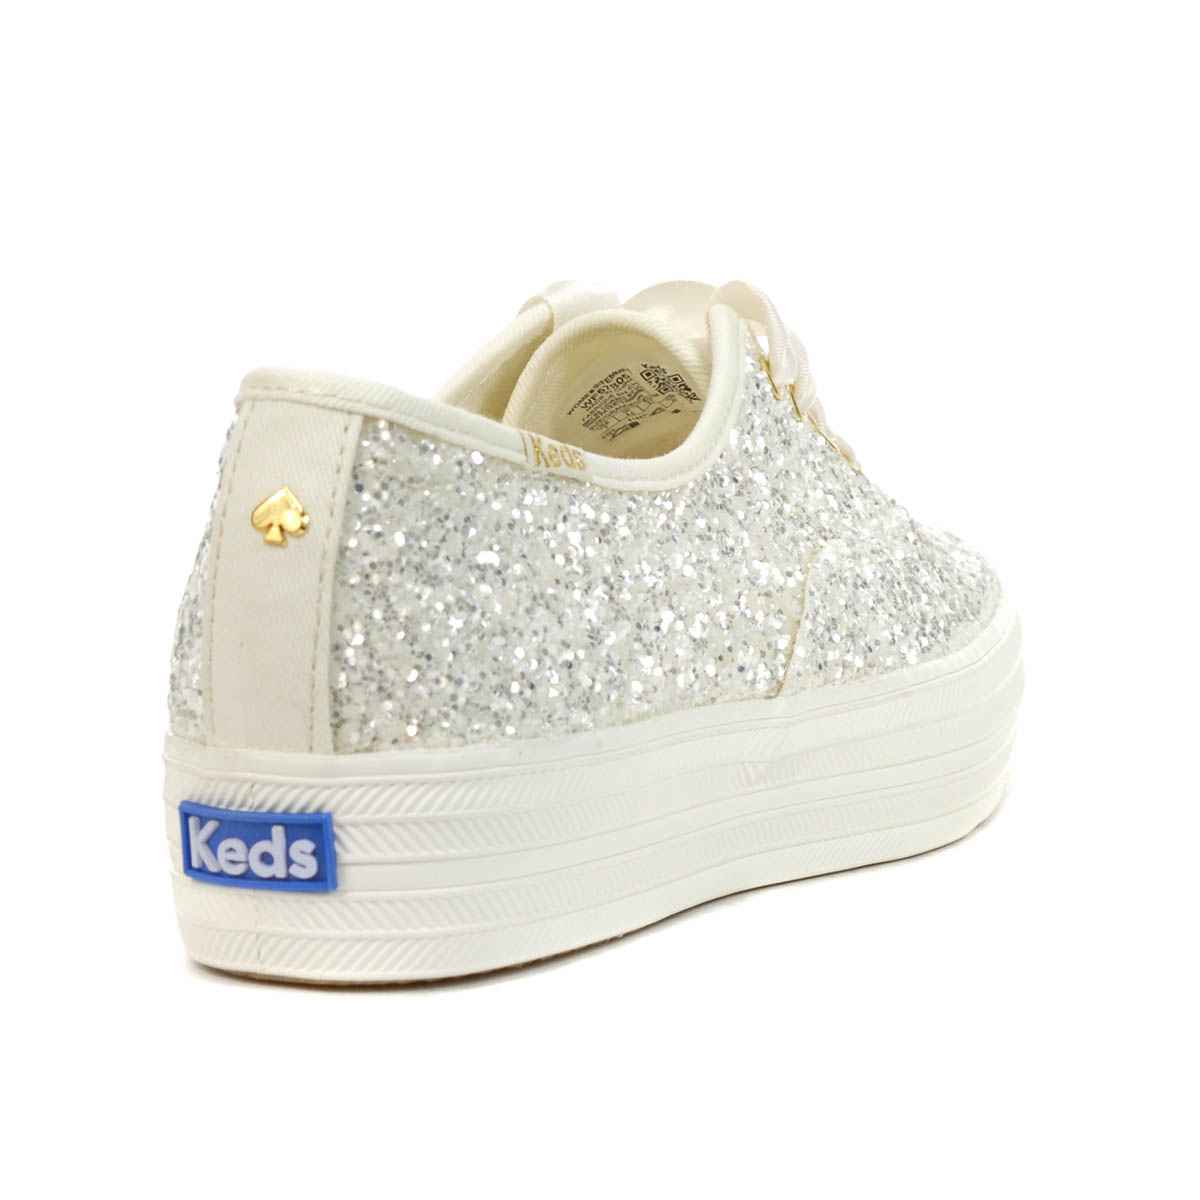 Keds x Kate Spade New York Triple Glitter Cream Sneakers WF57805 